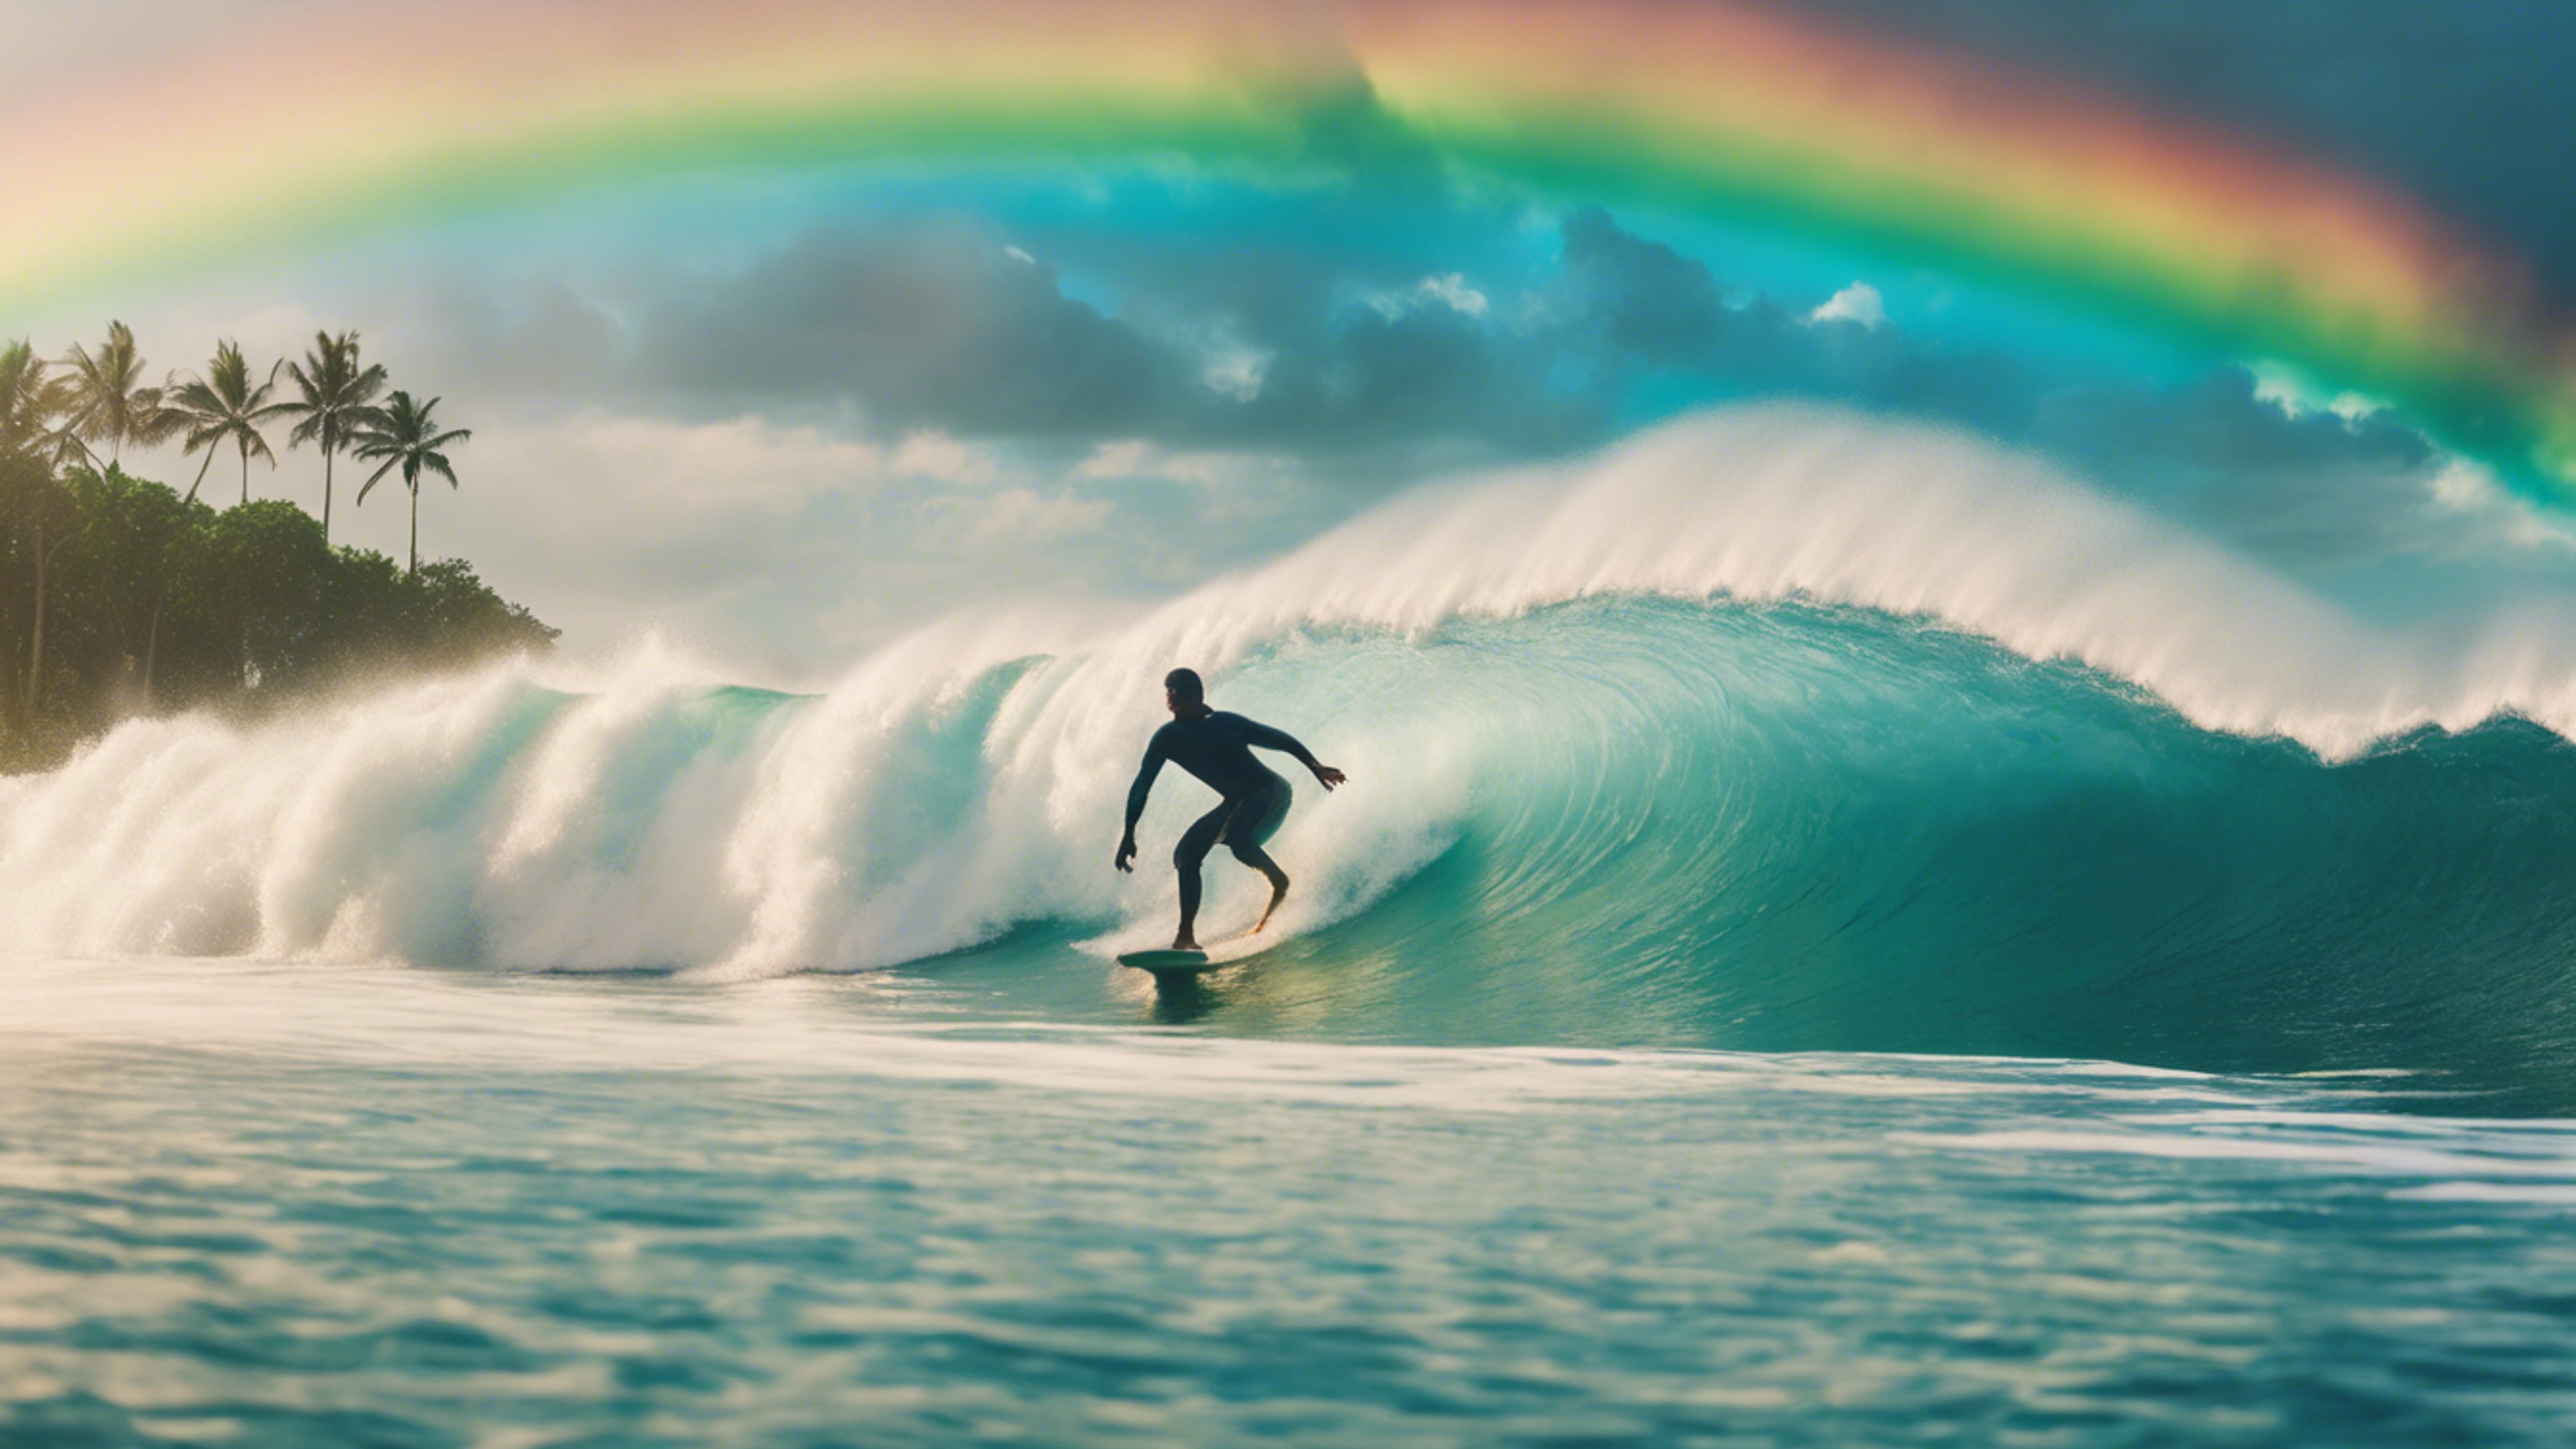 A spontaneous man surfing on a giant wave under a scintillating rainbow in a tropical ocean. Taustakuva[41deec9b24da40d39c6d]